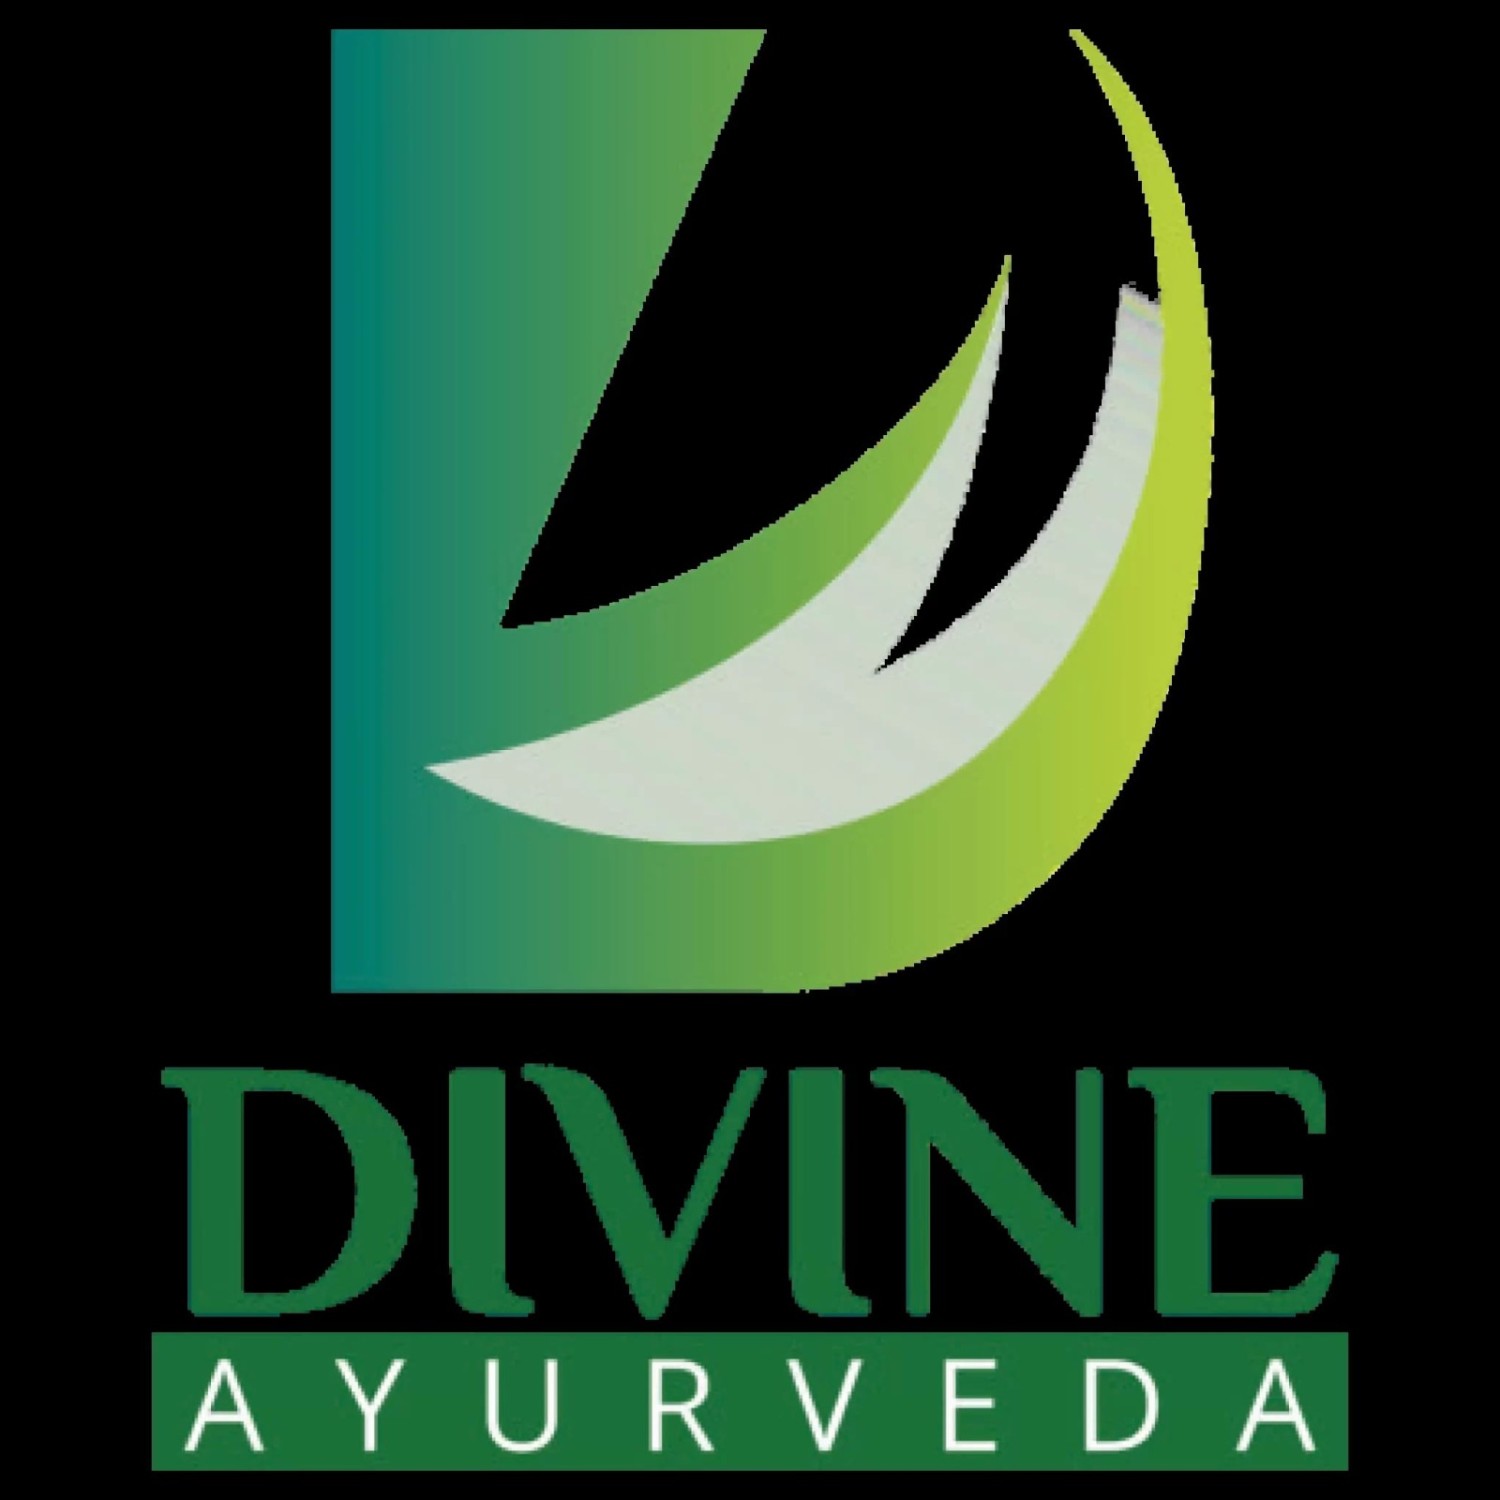 Divine Ayurvedic Hospital|Hospitals|Medical Services